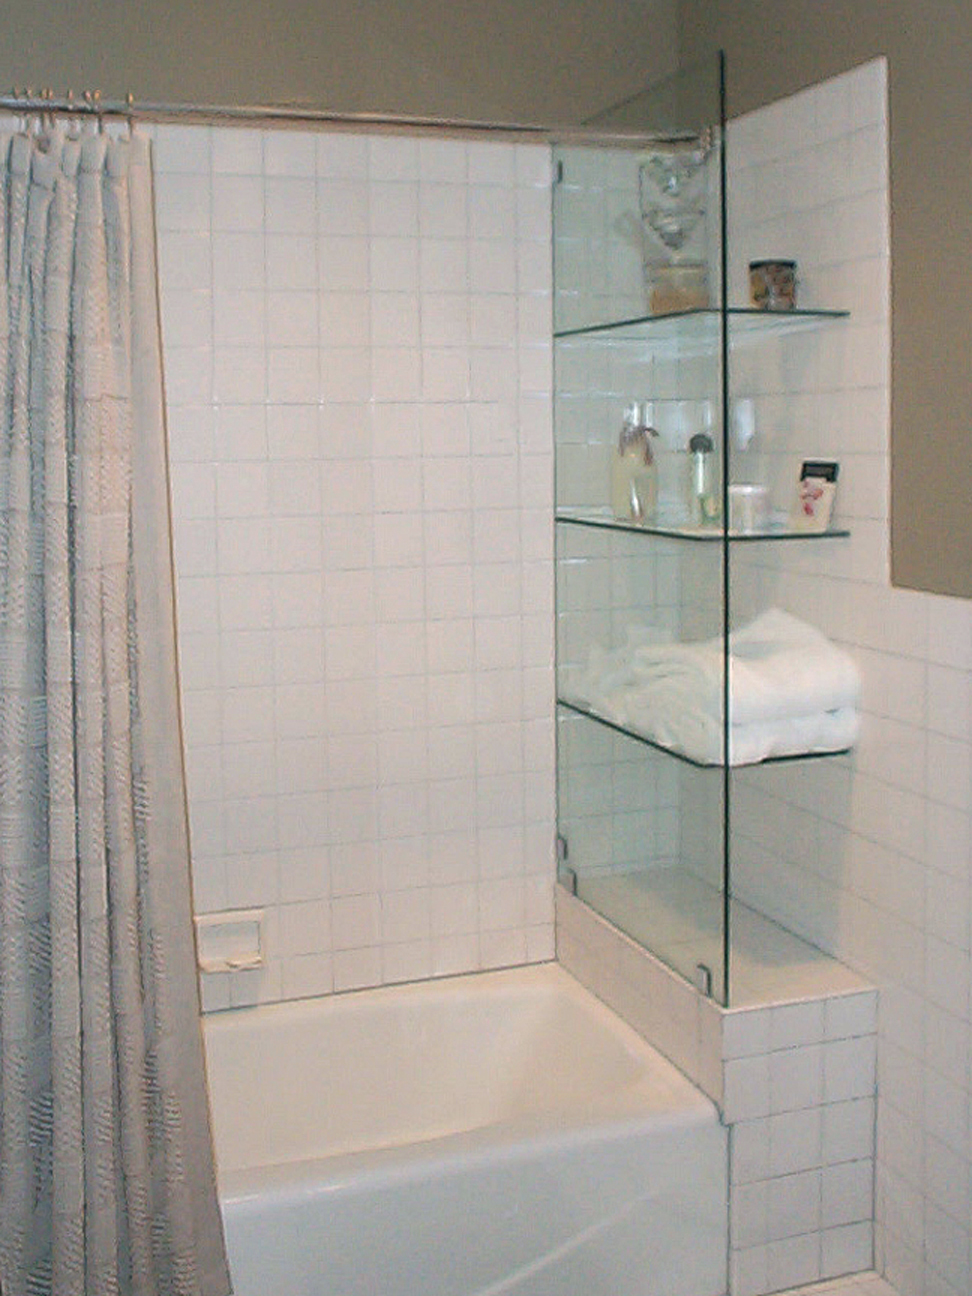 02 Bath tub shelves